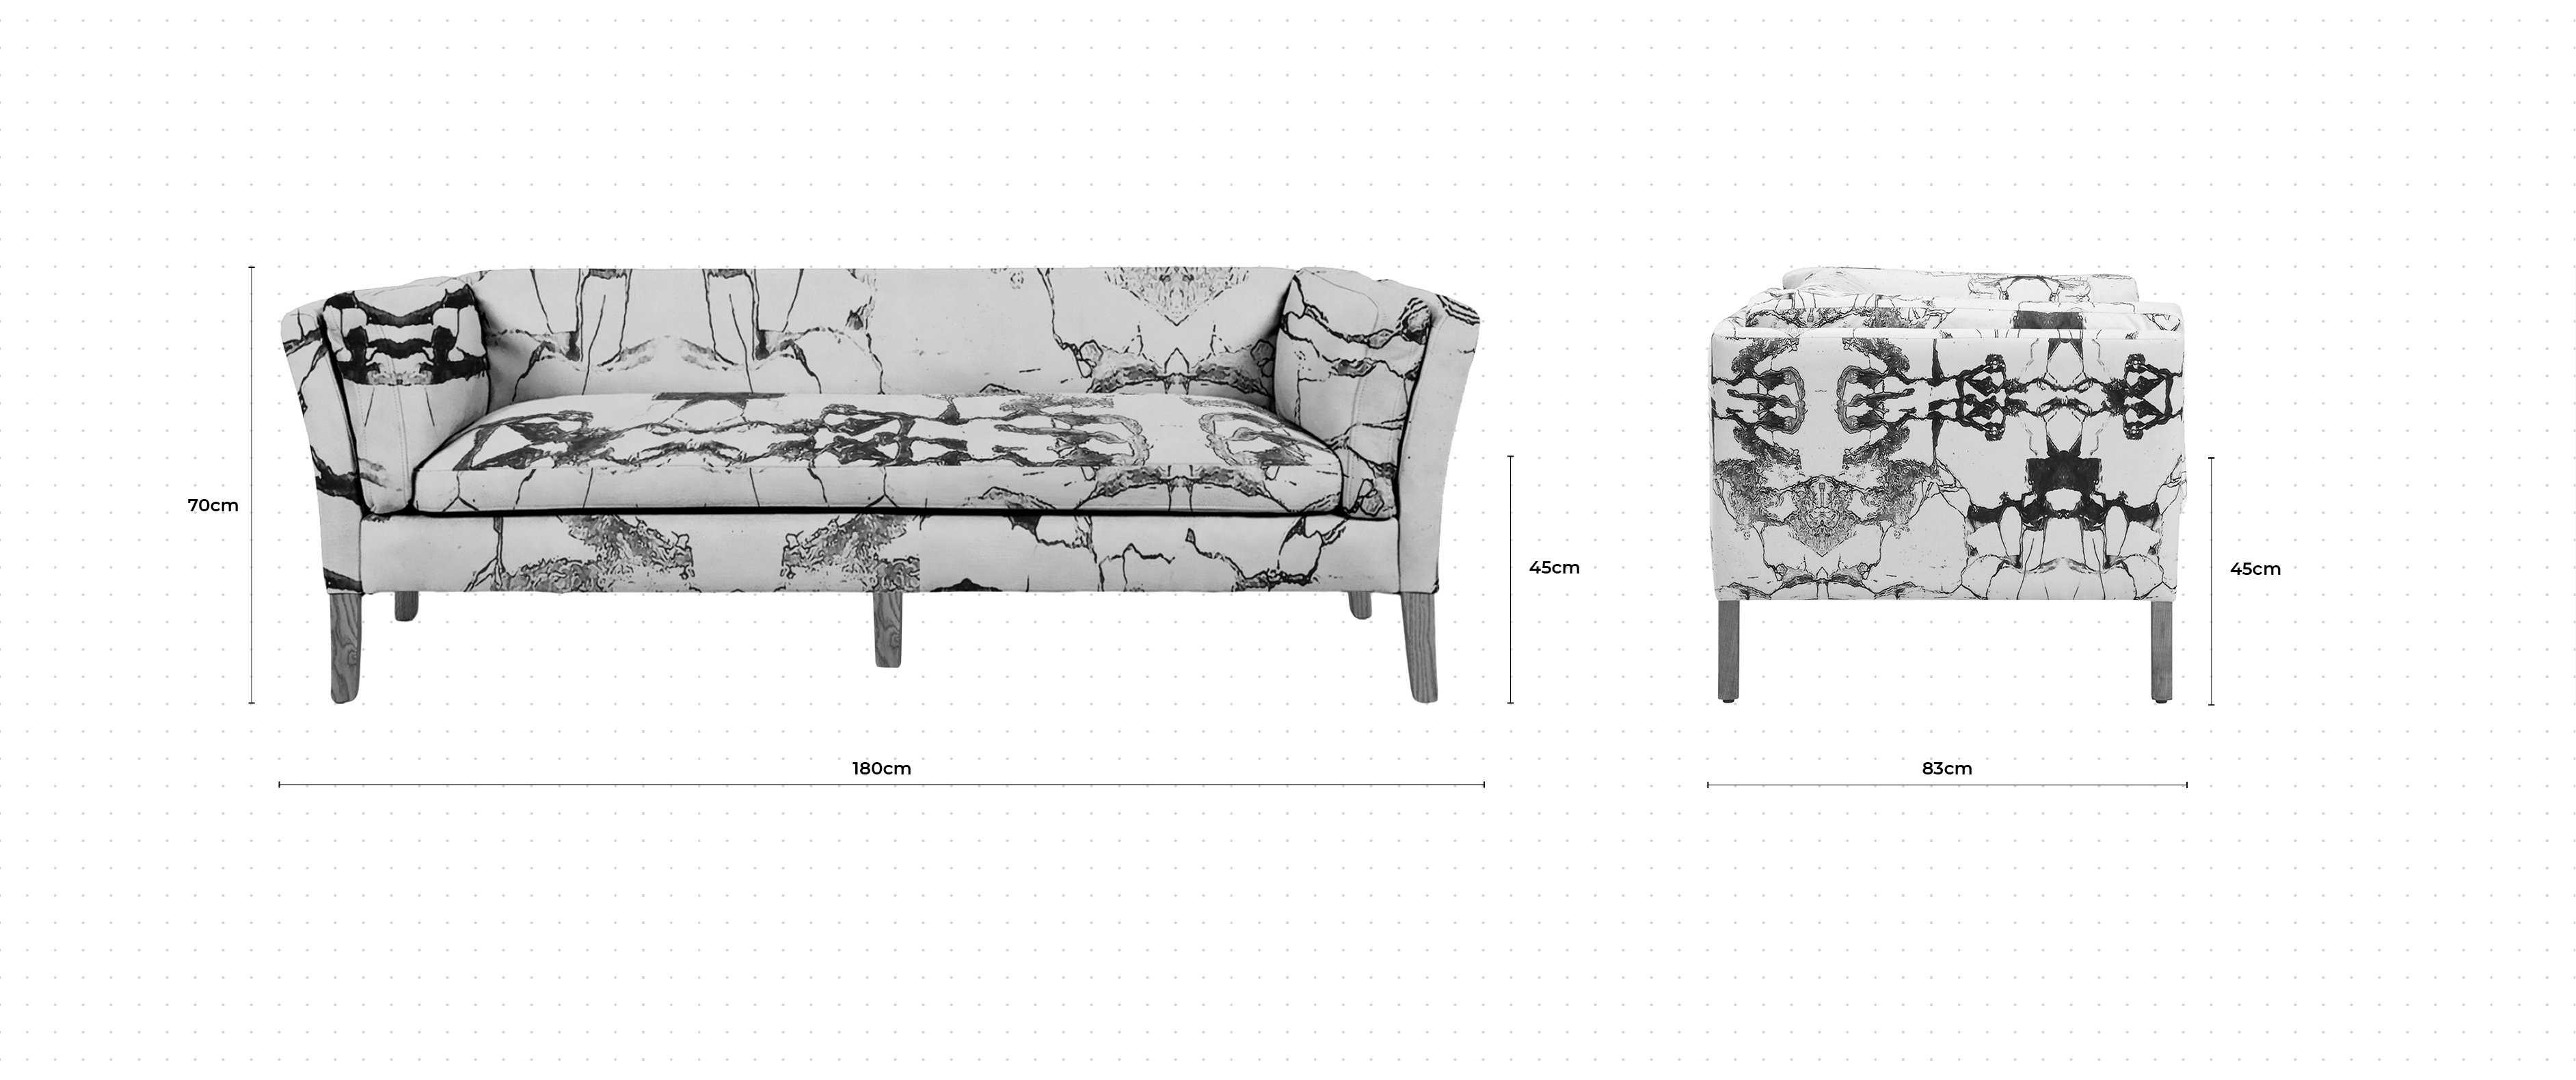 Whitehead 3 Seater Sofa dimensions